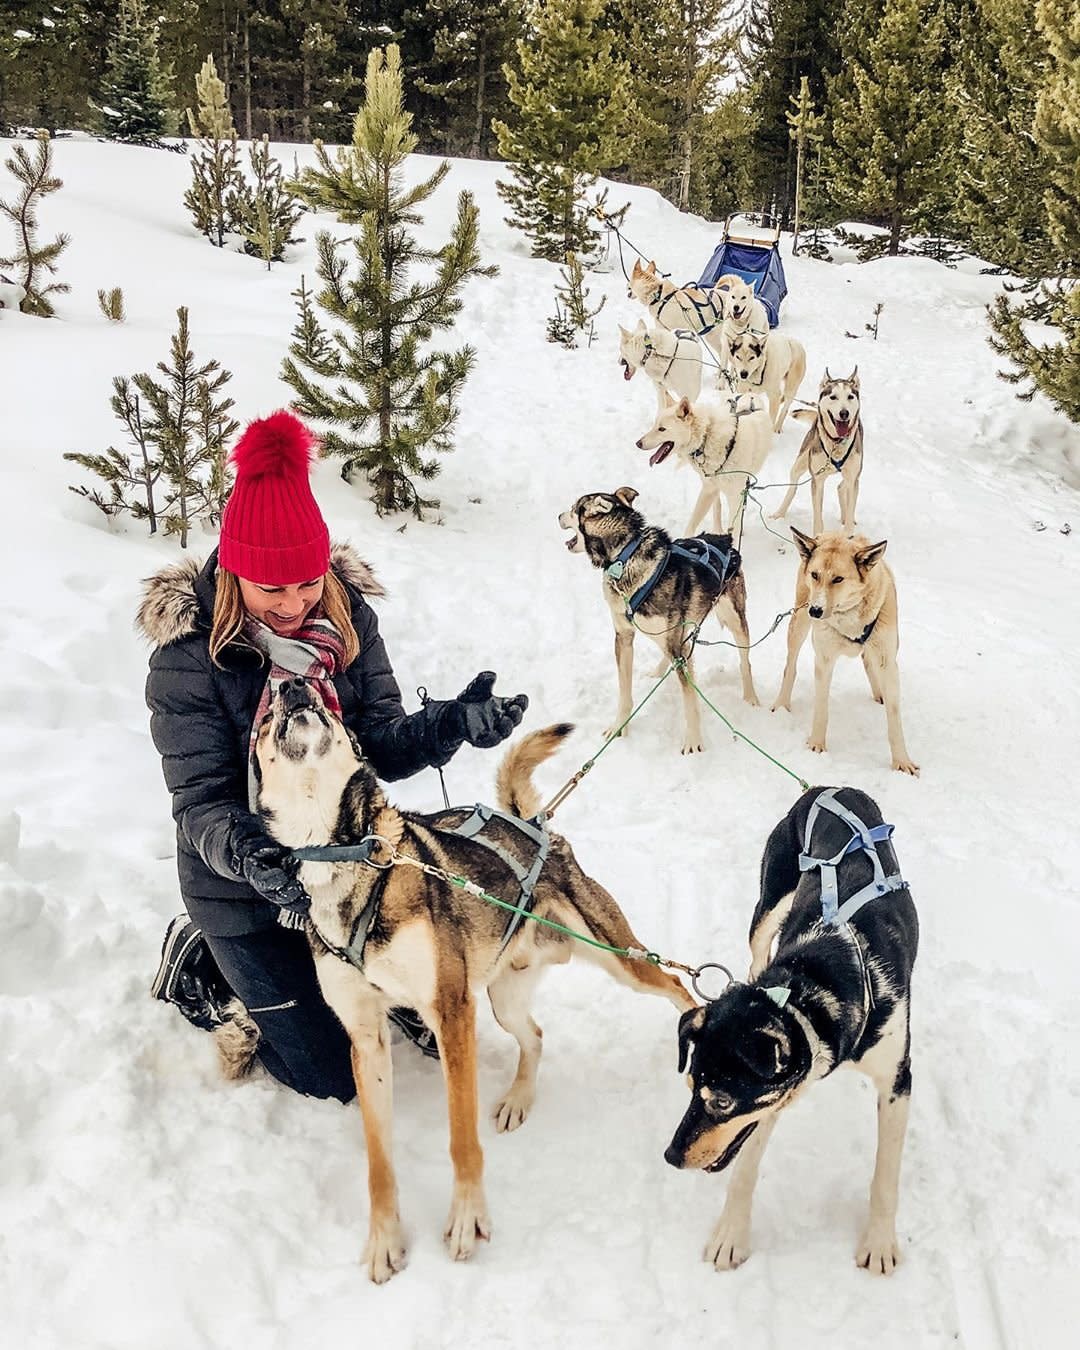 Photo by user hauteholidaystravel, caption reads Dog (sledding) days of winter 🐾❄️🤗 #hauteholidaystravel #dogsledding #bigsky #moonlightbasin #montanamoment